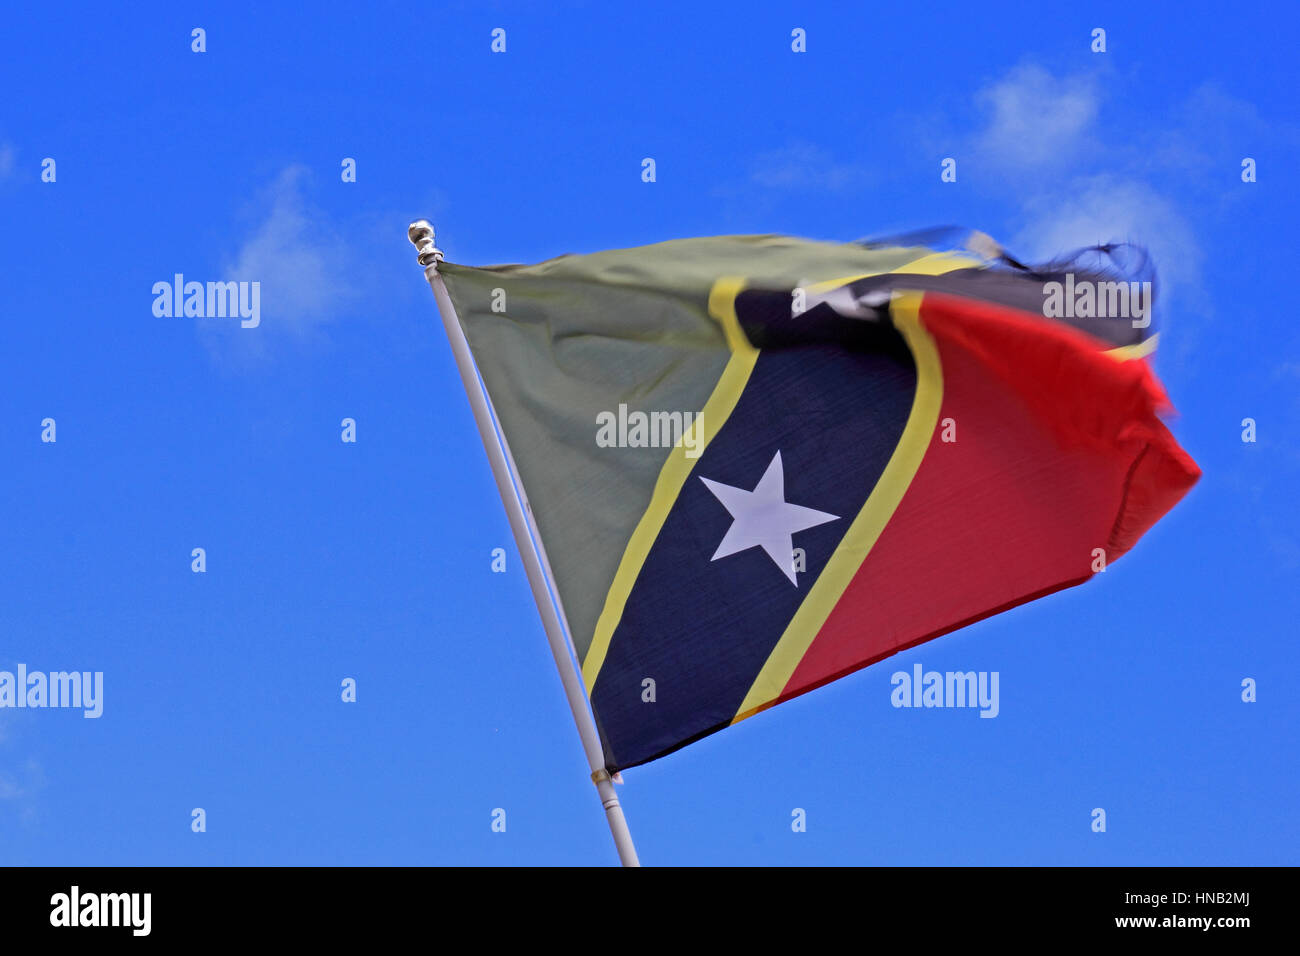 National flag of St Kitts flying against a blue sky Stock Photo